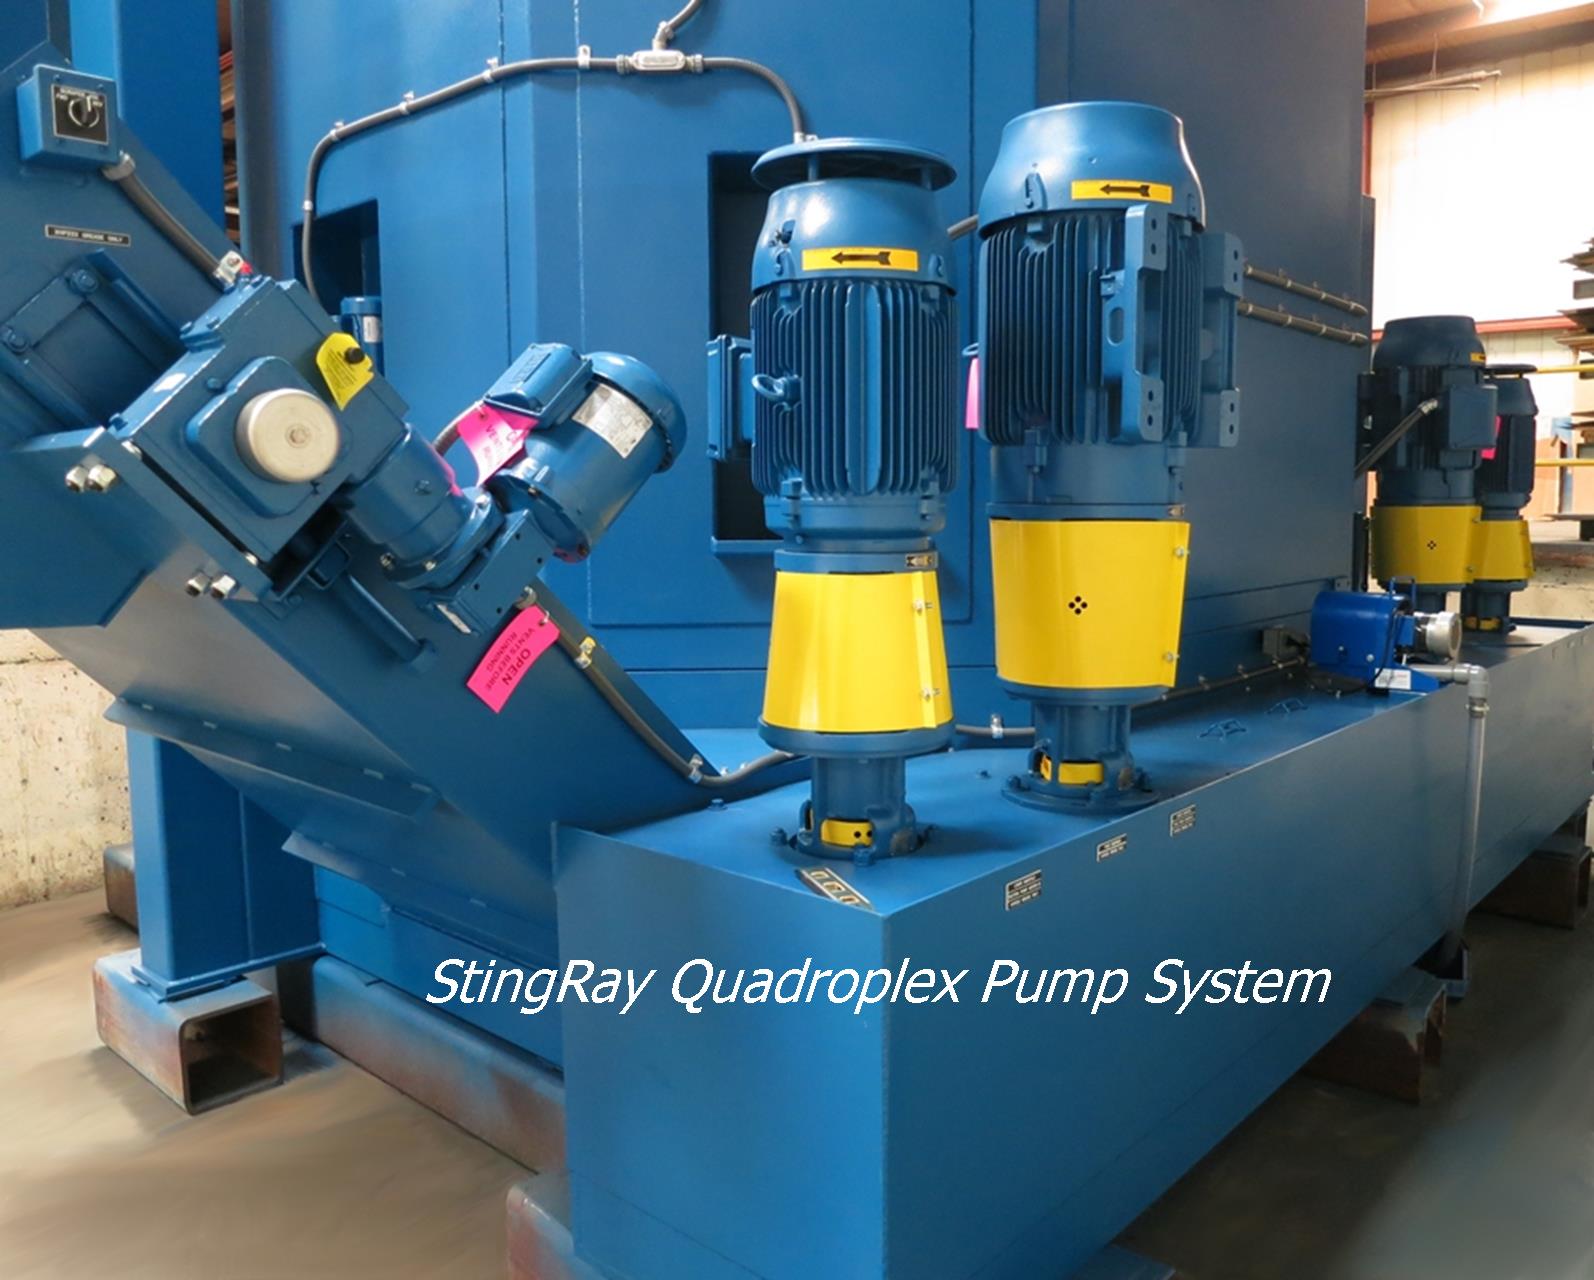 StingRay Parts Washer Quadroplex Pump System